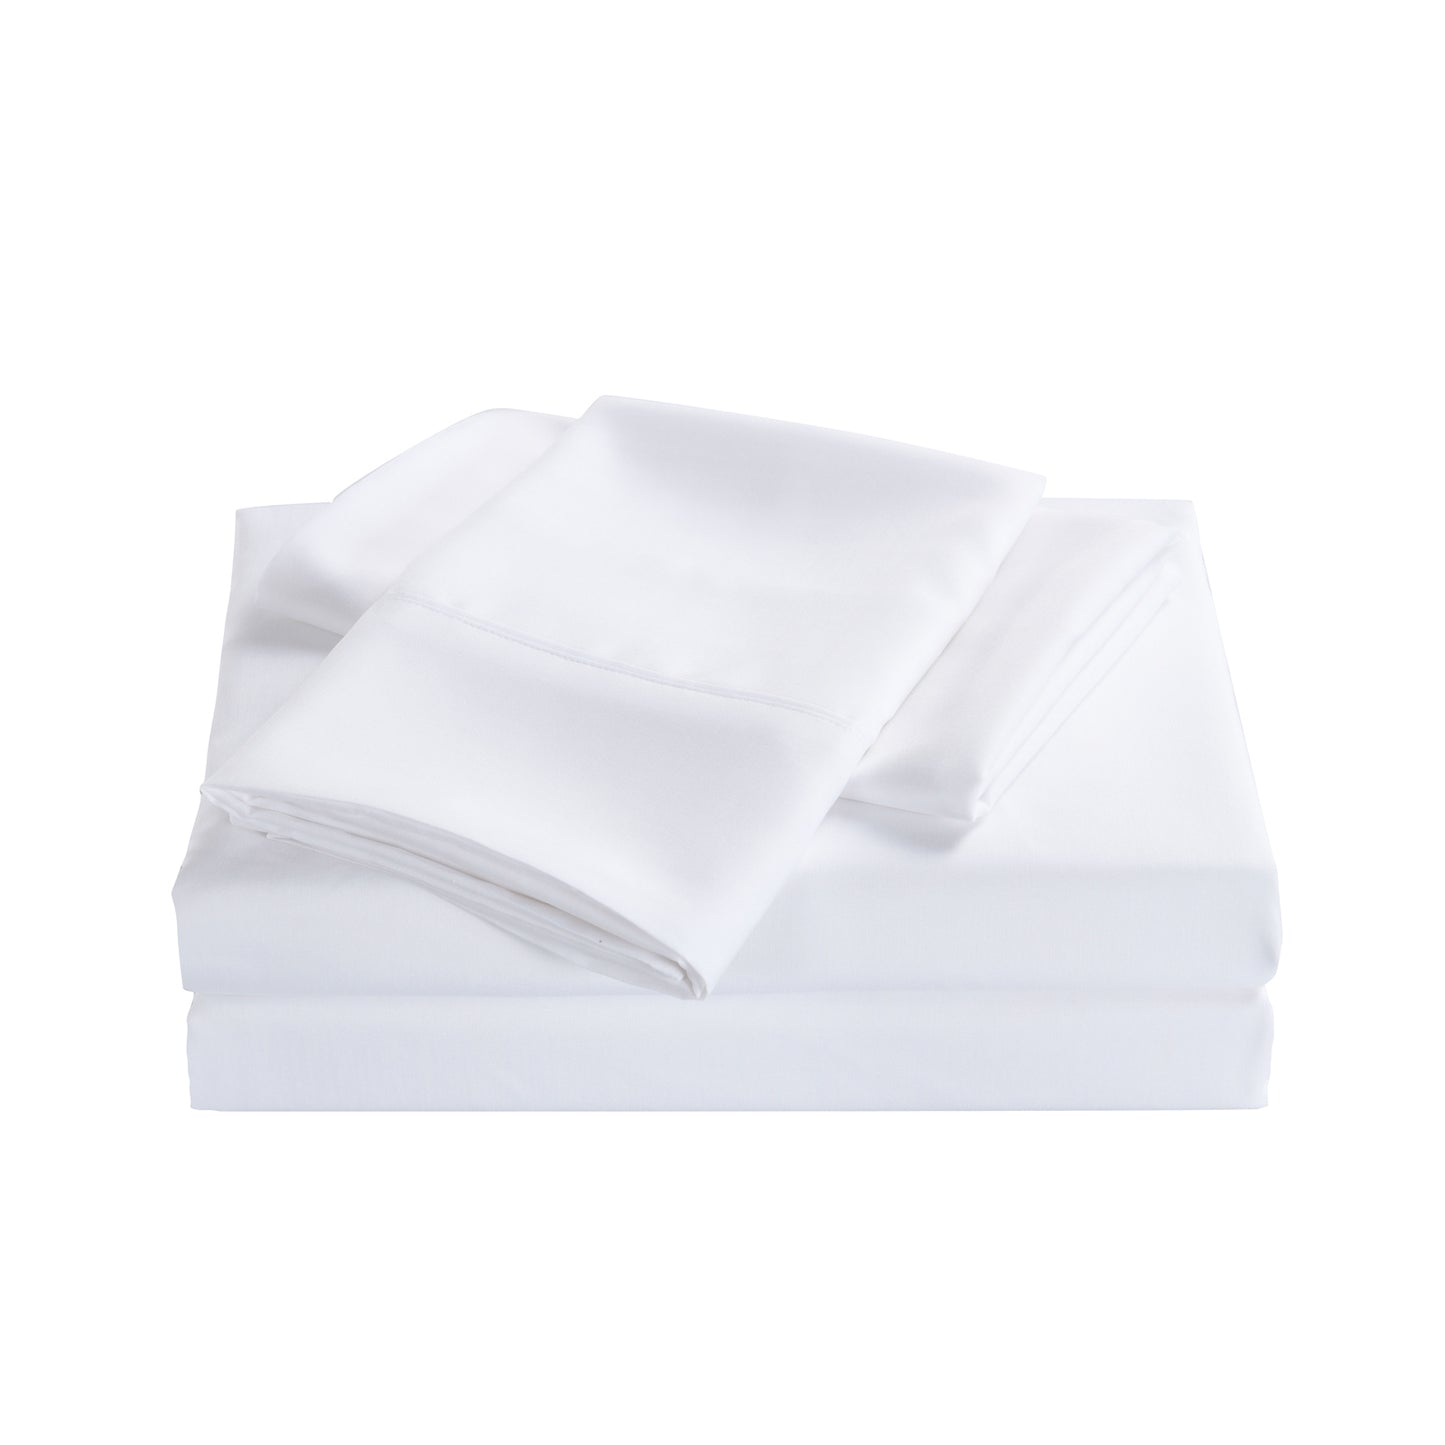 KING 2000TC Bamboo Cooling Sheet Set Ultra Soft Bedding - White